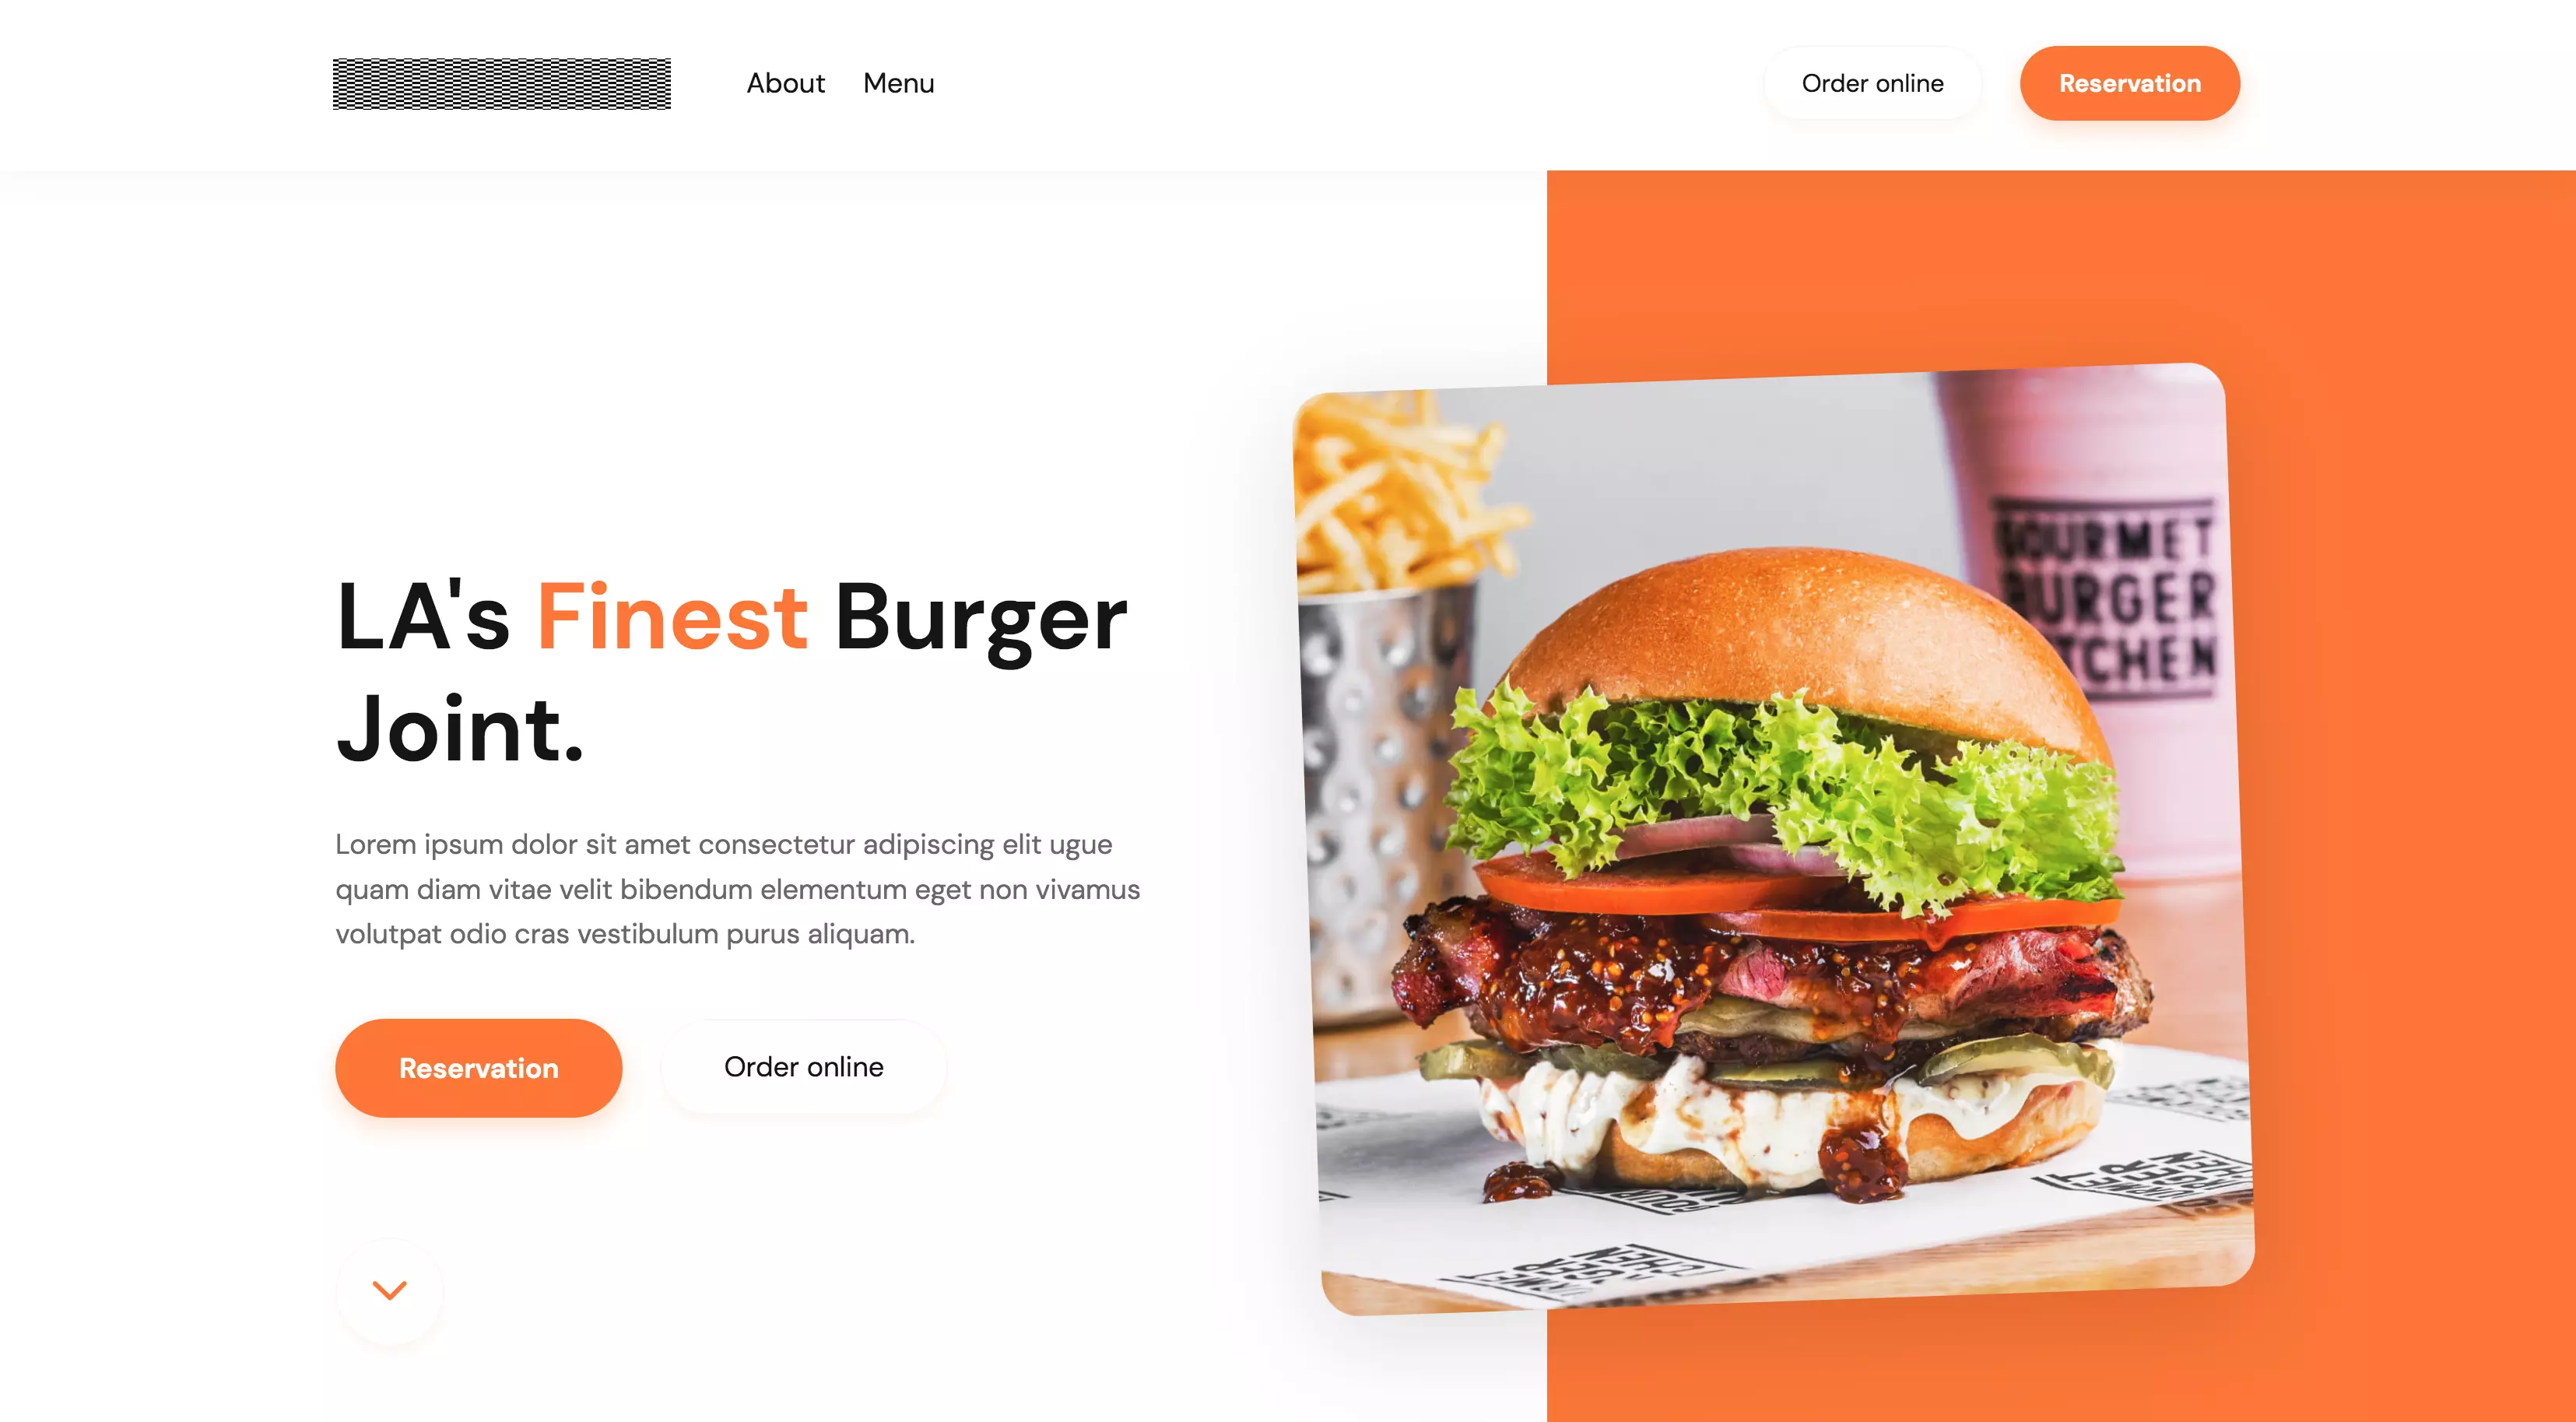 Restaurant A web site visual example part 1, hamburger on display